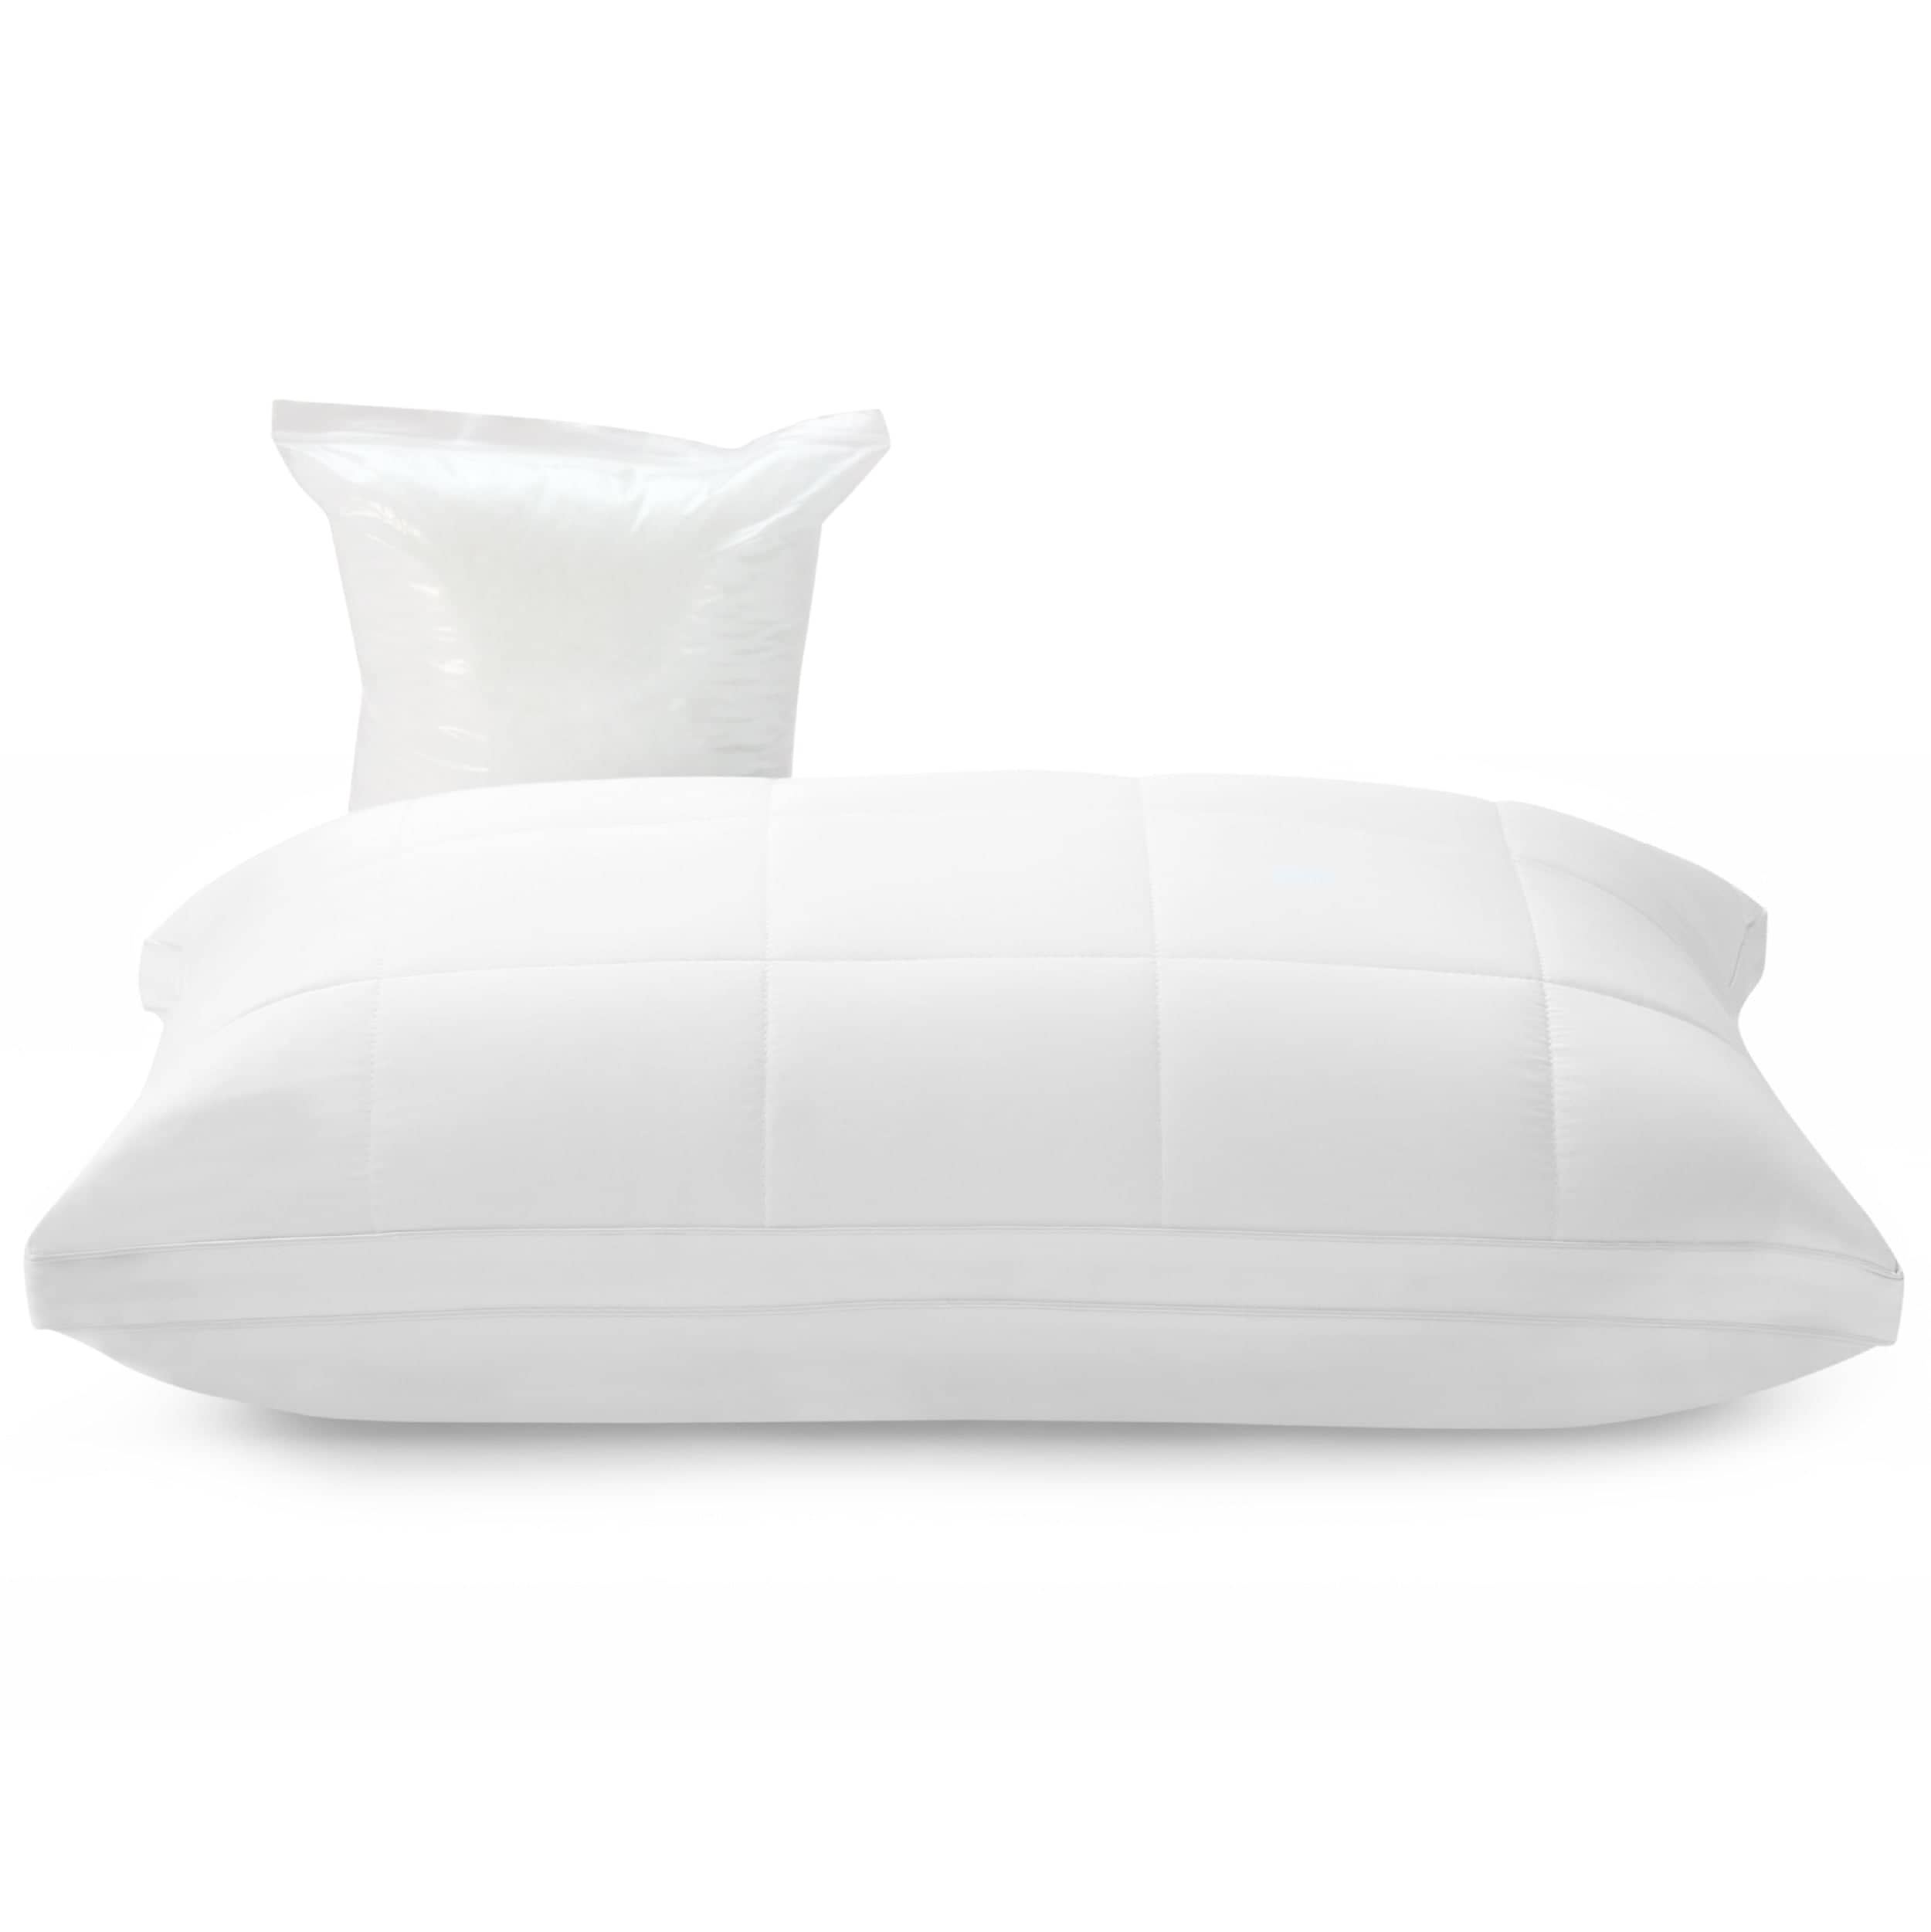 Bedsure Reversible Rayon Derived from Bamboo Pillows